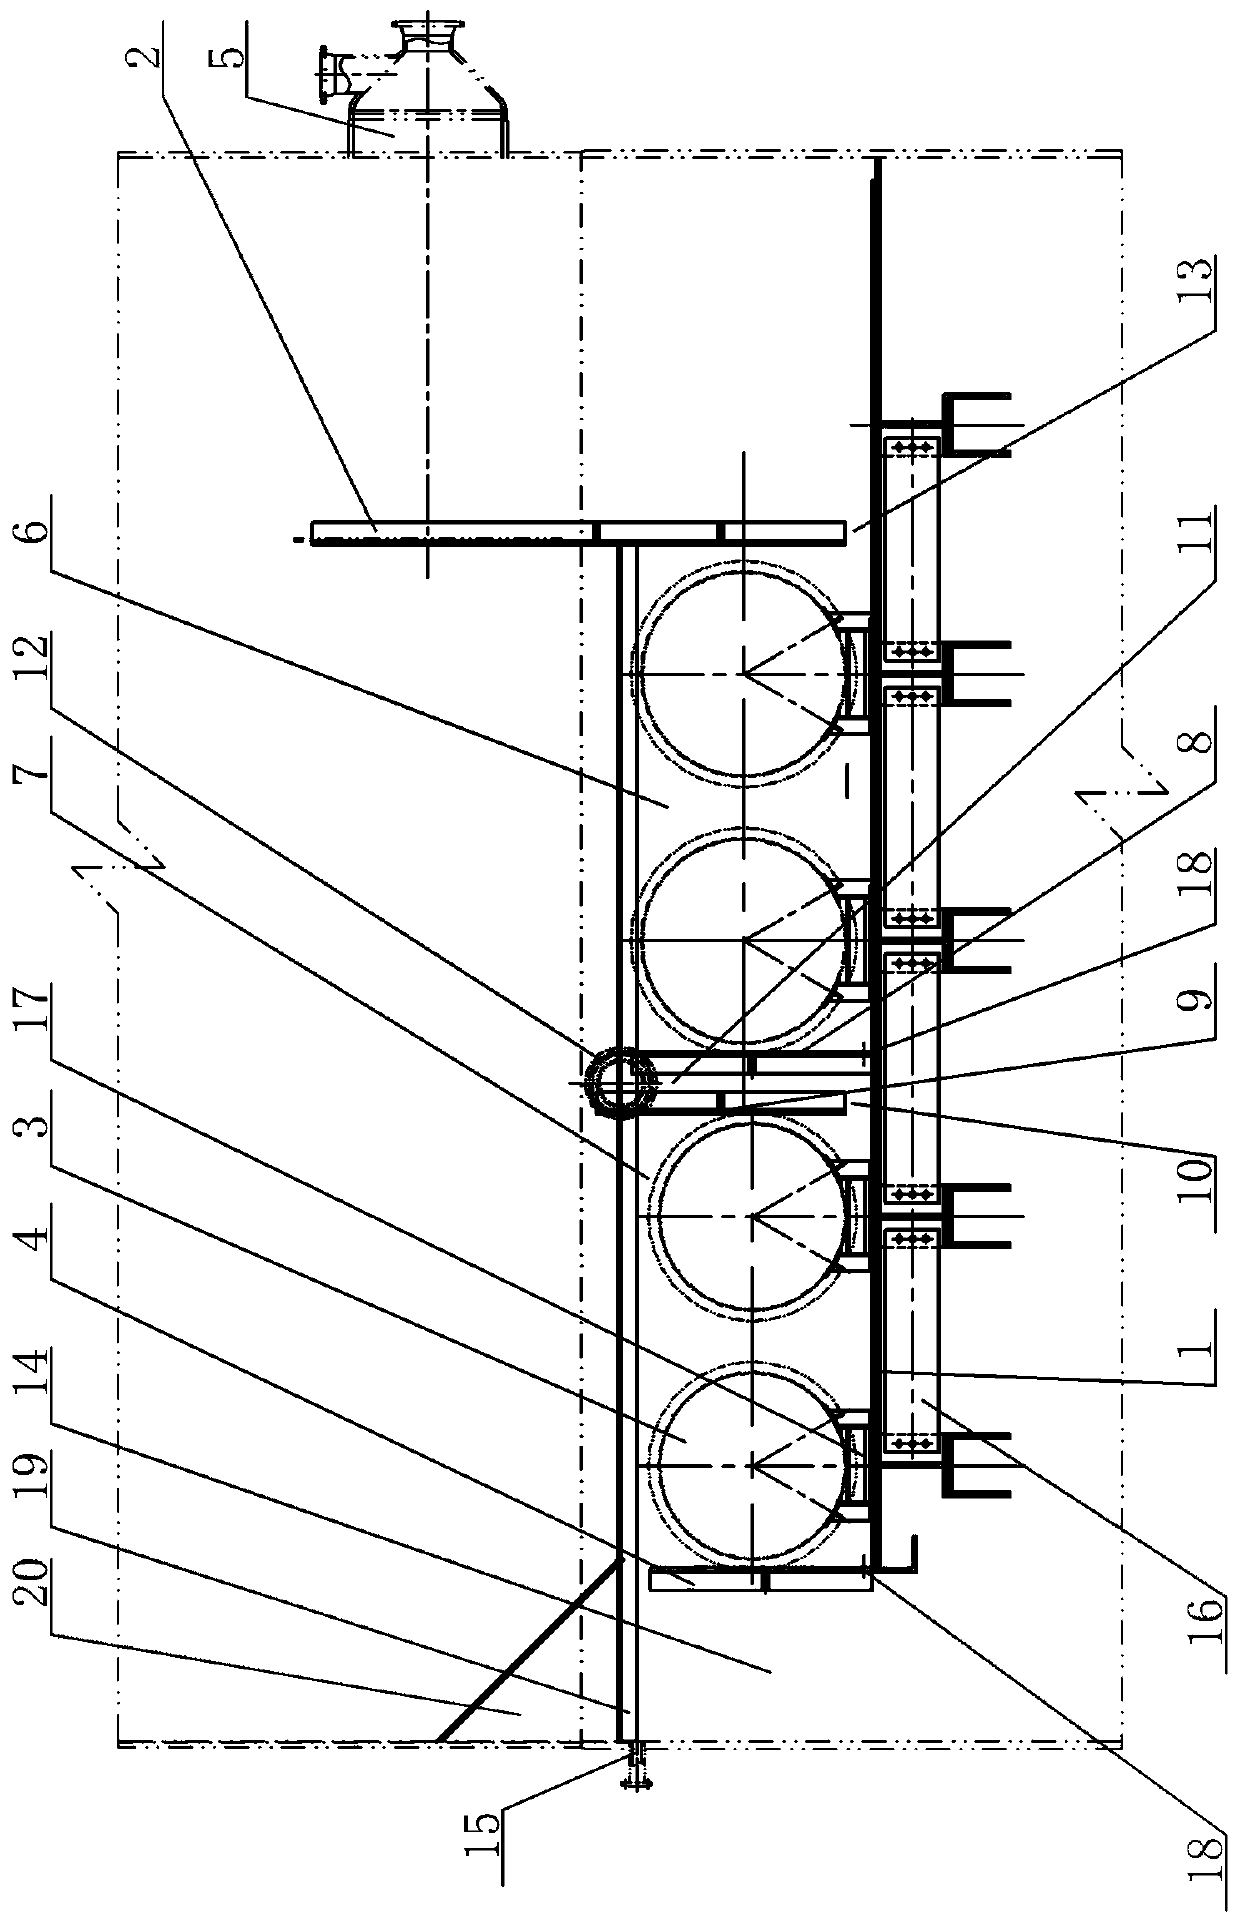 Heat exchanger arrangement structure of pre-concentration tower